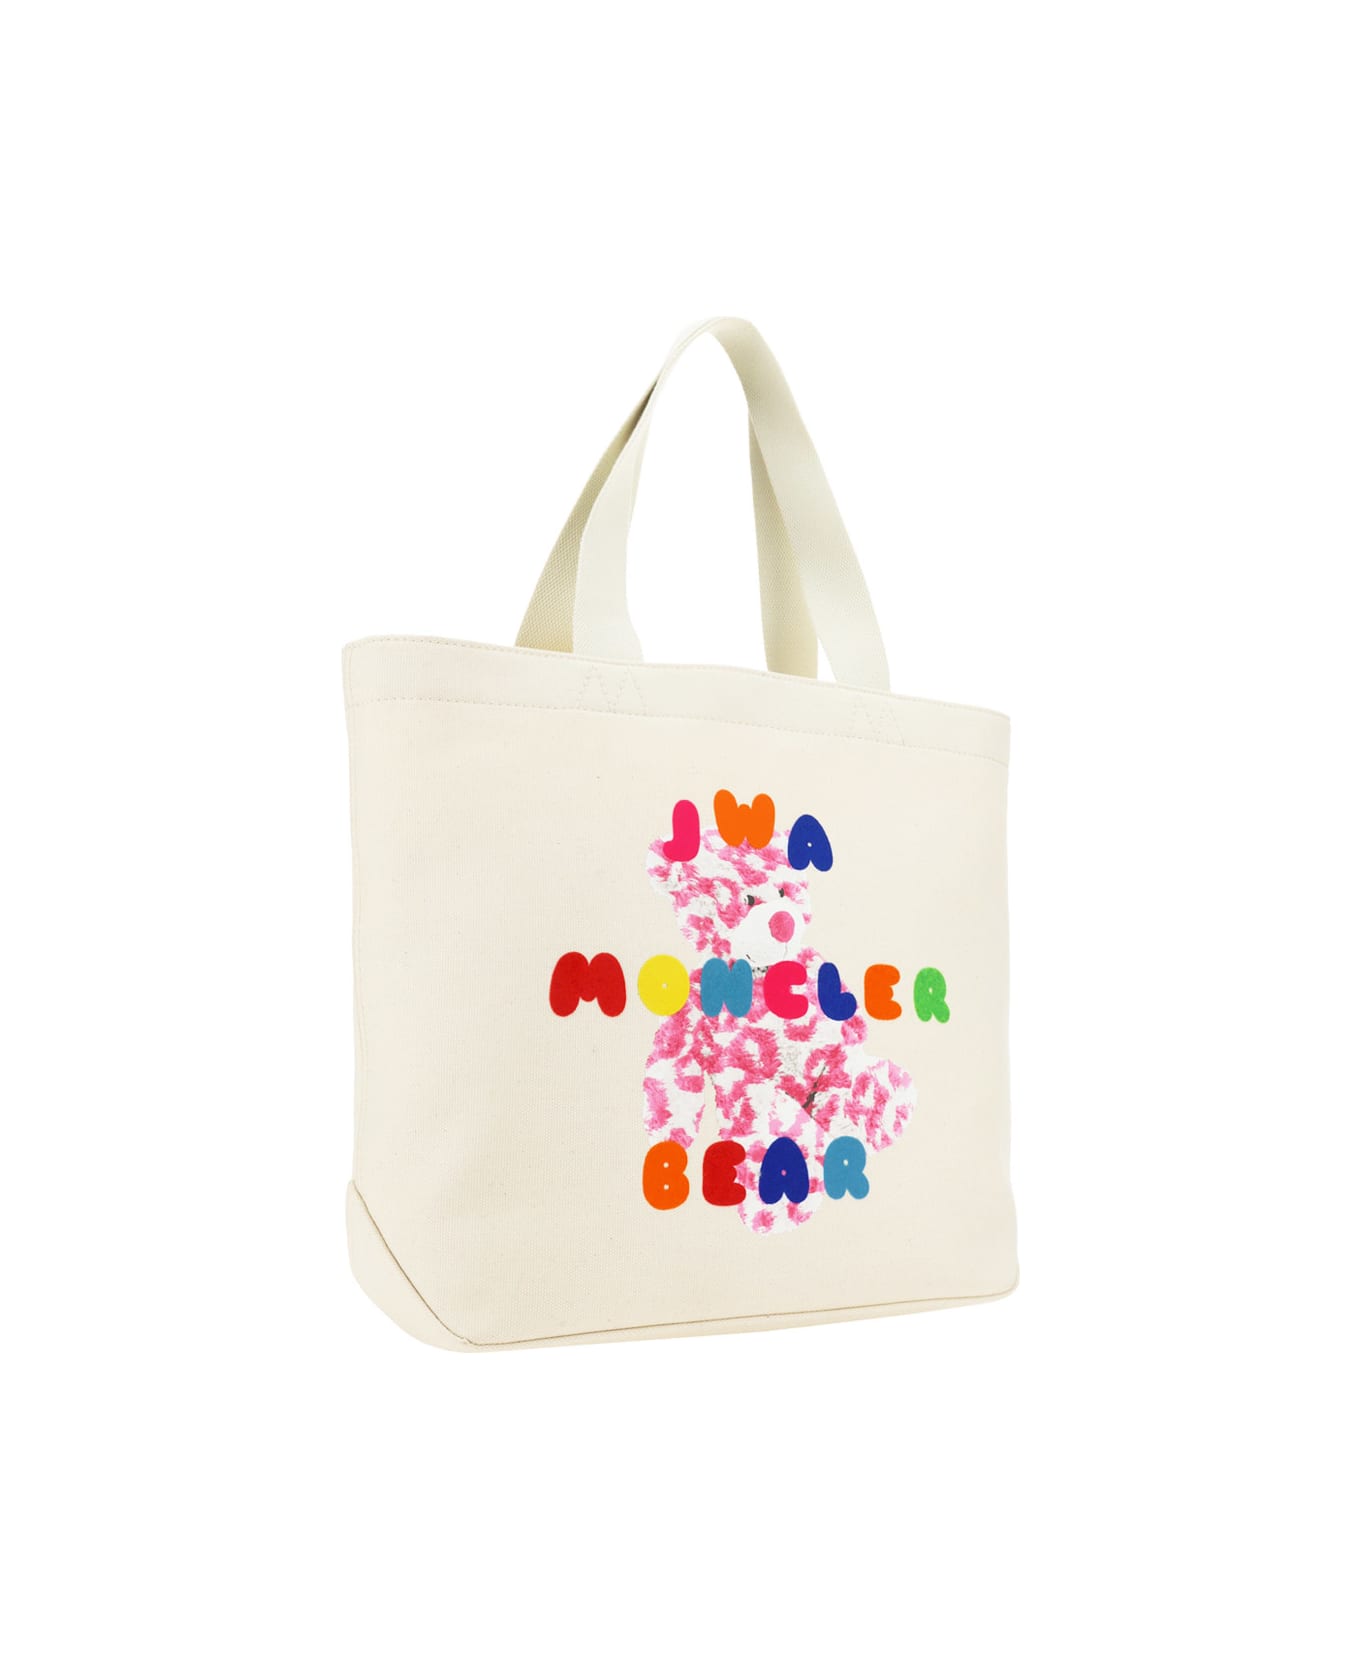 Moncler Genius X J.w.anderson Tote Bag | italist